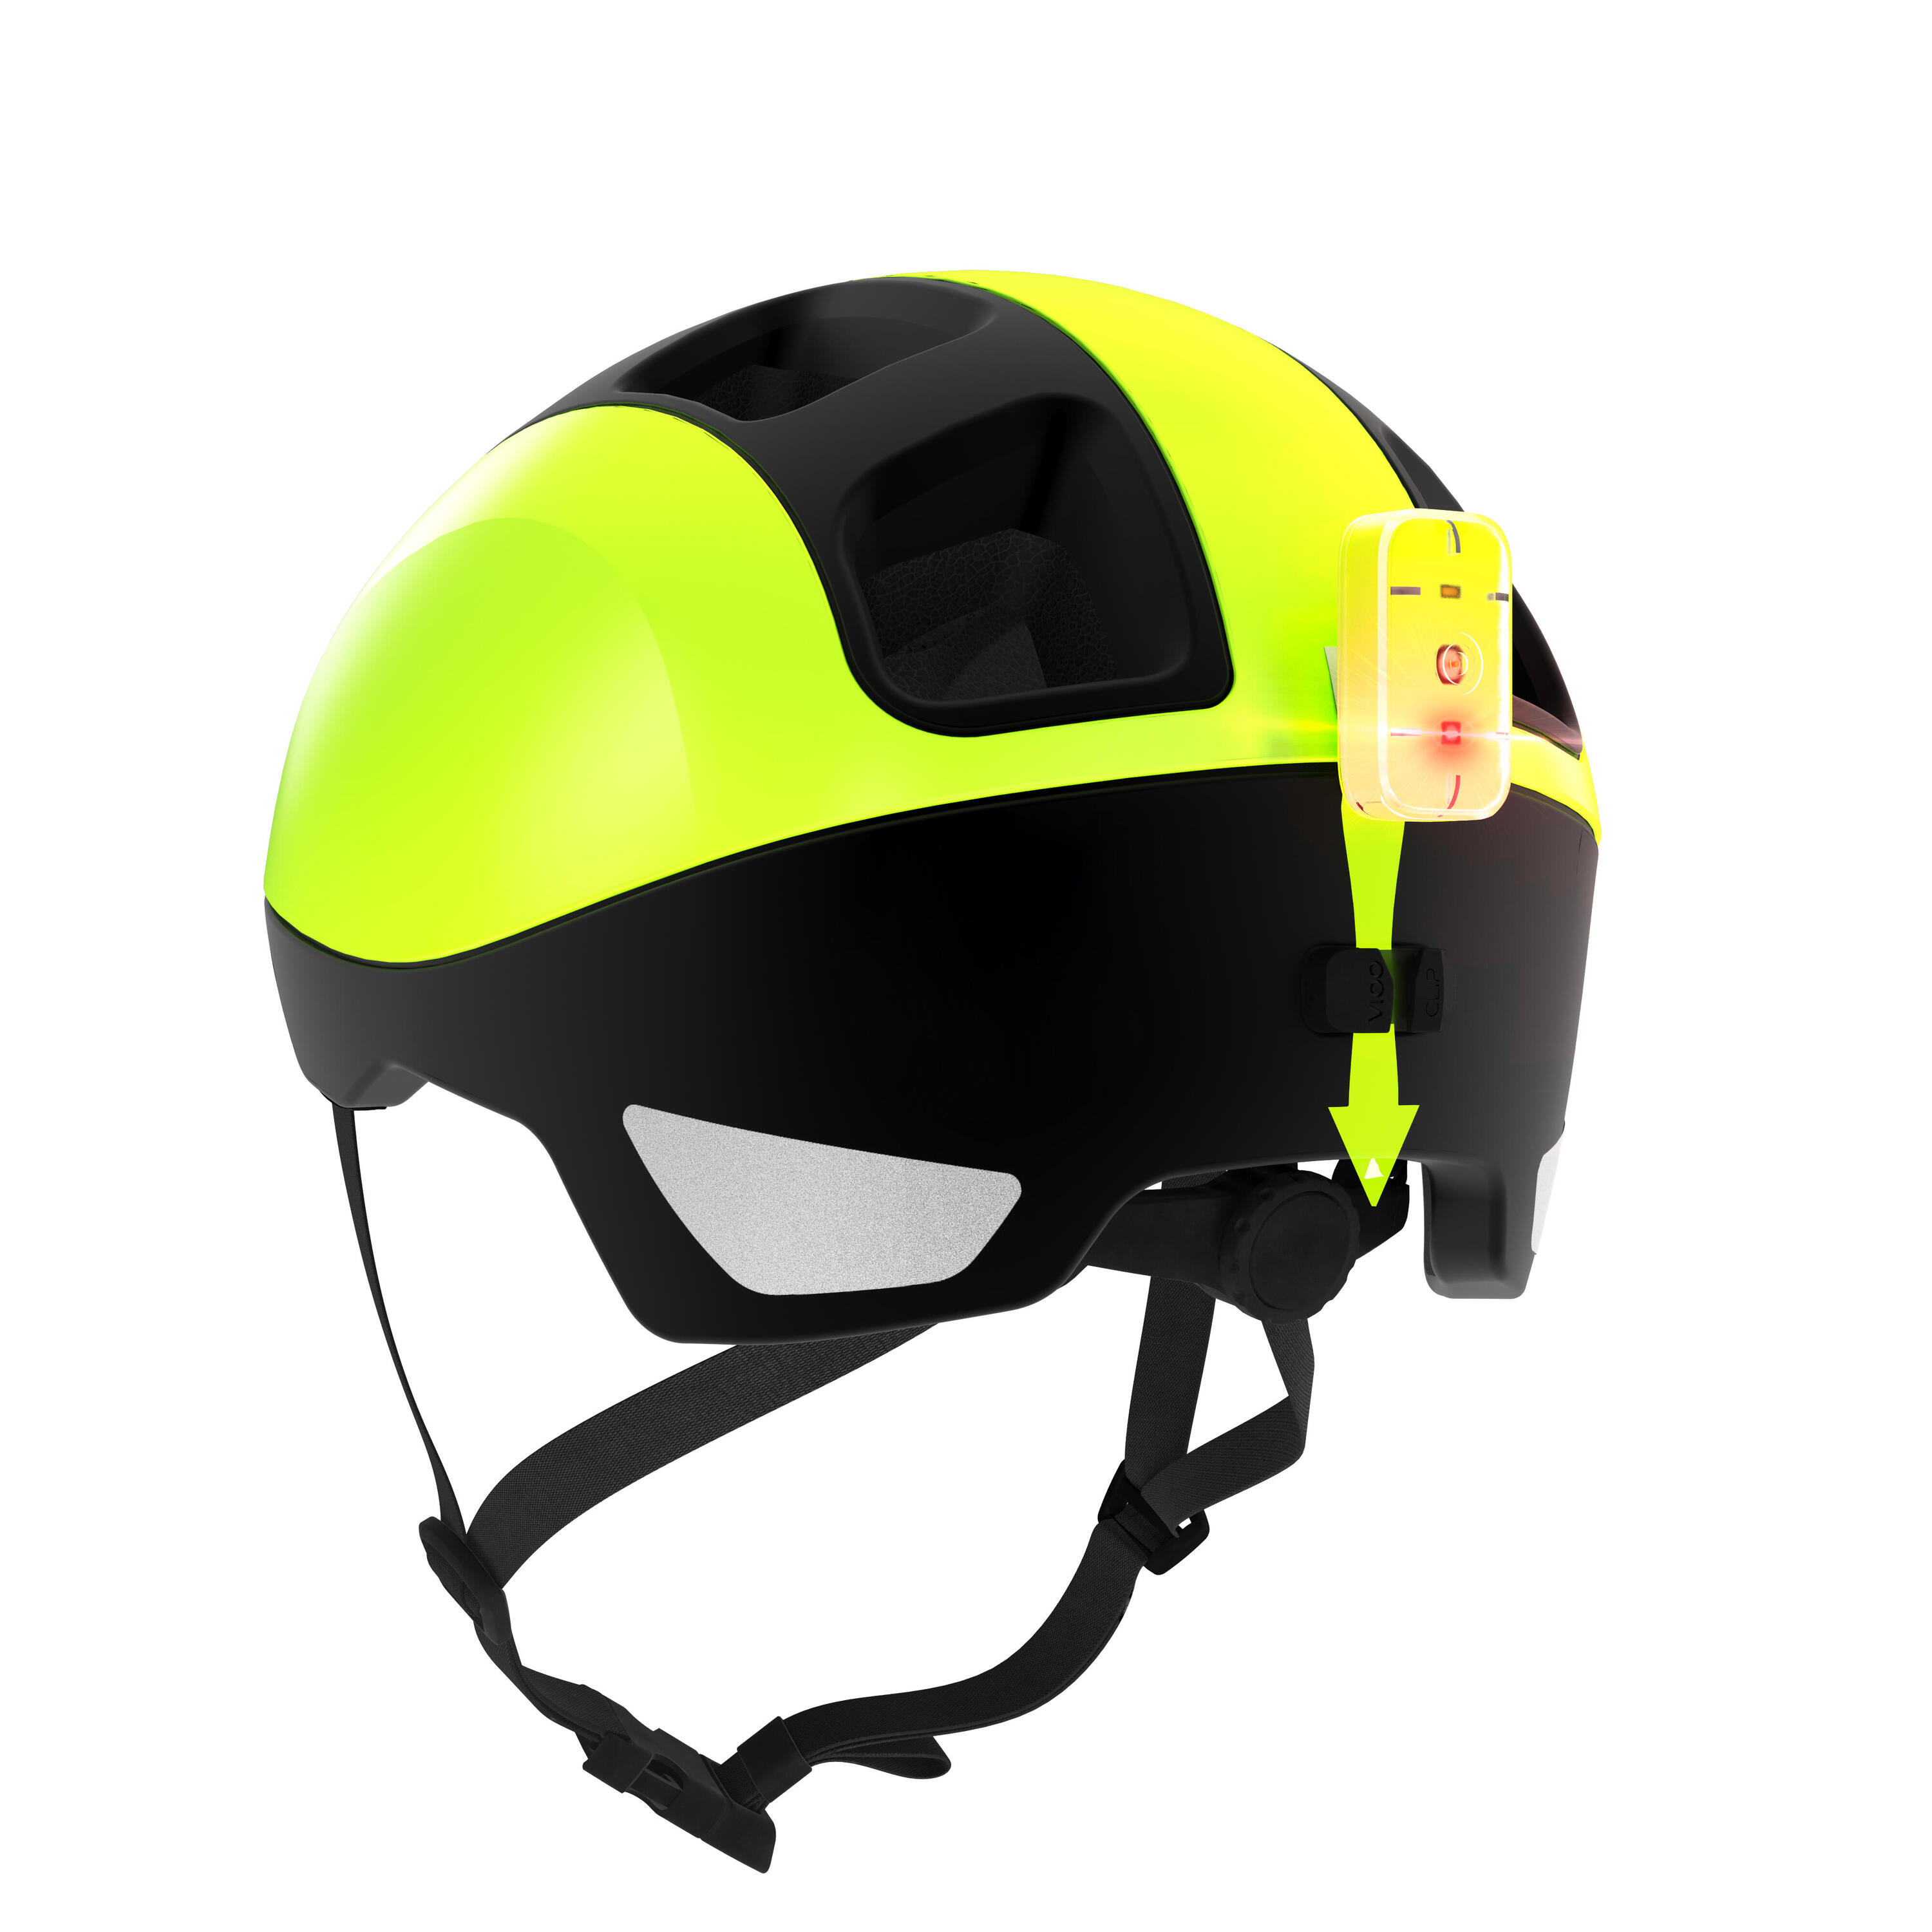 540 City Cycling Helmet Yellow 4/13